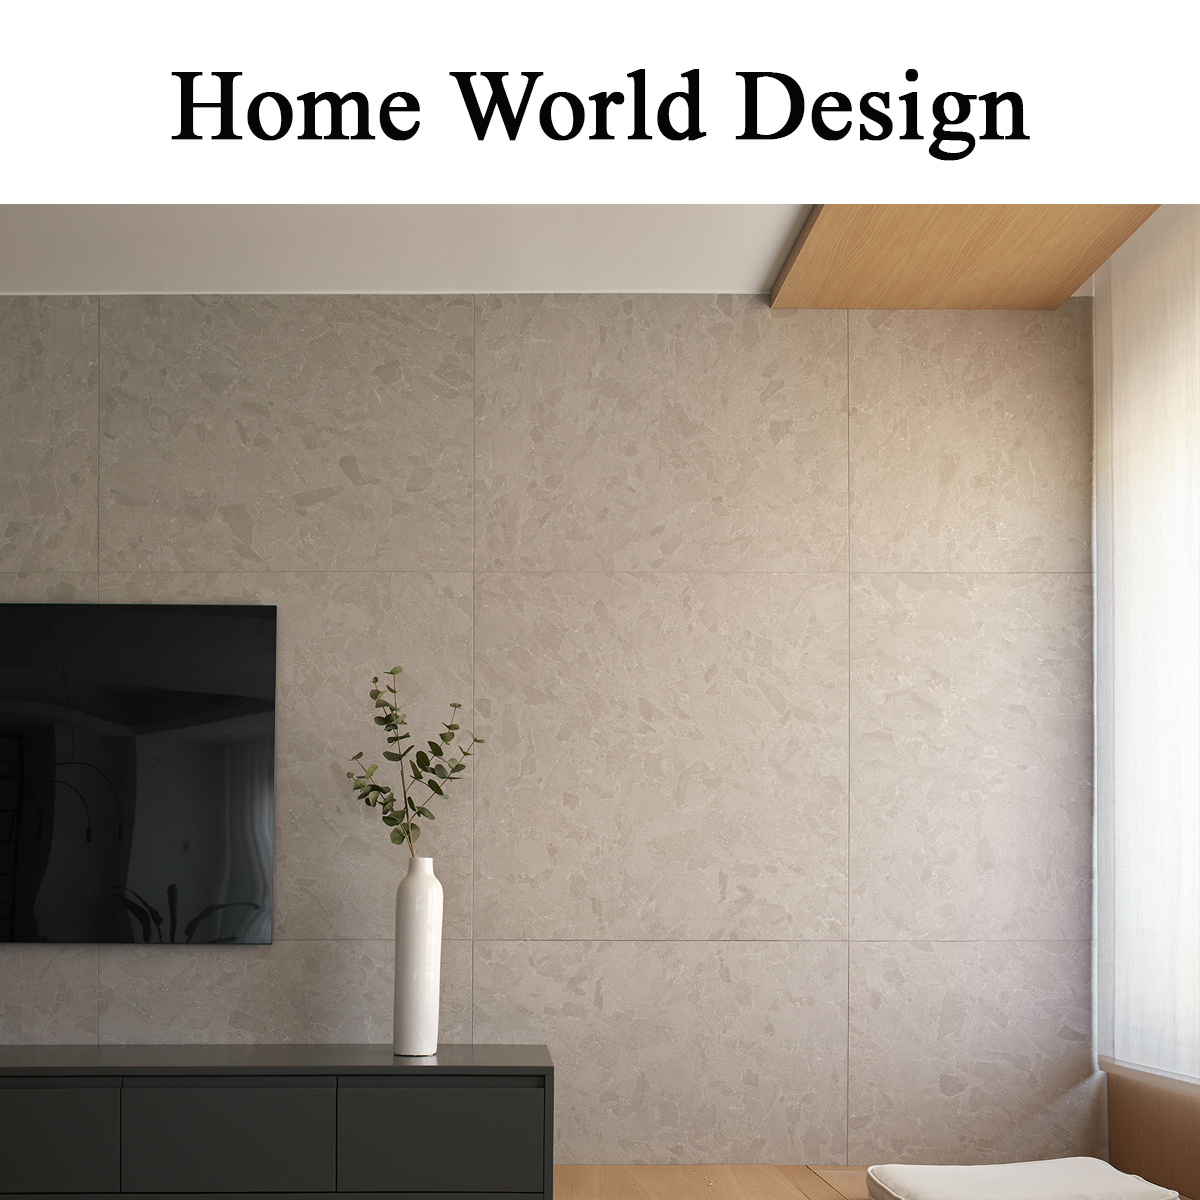 Home World Design